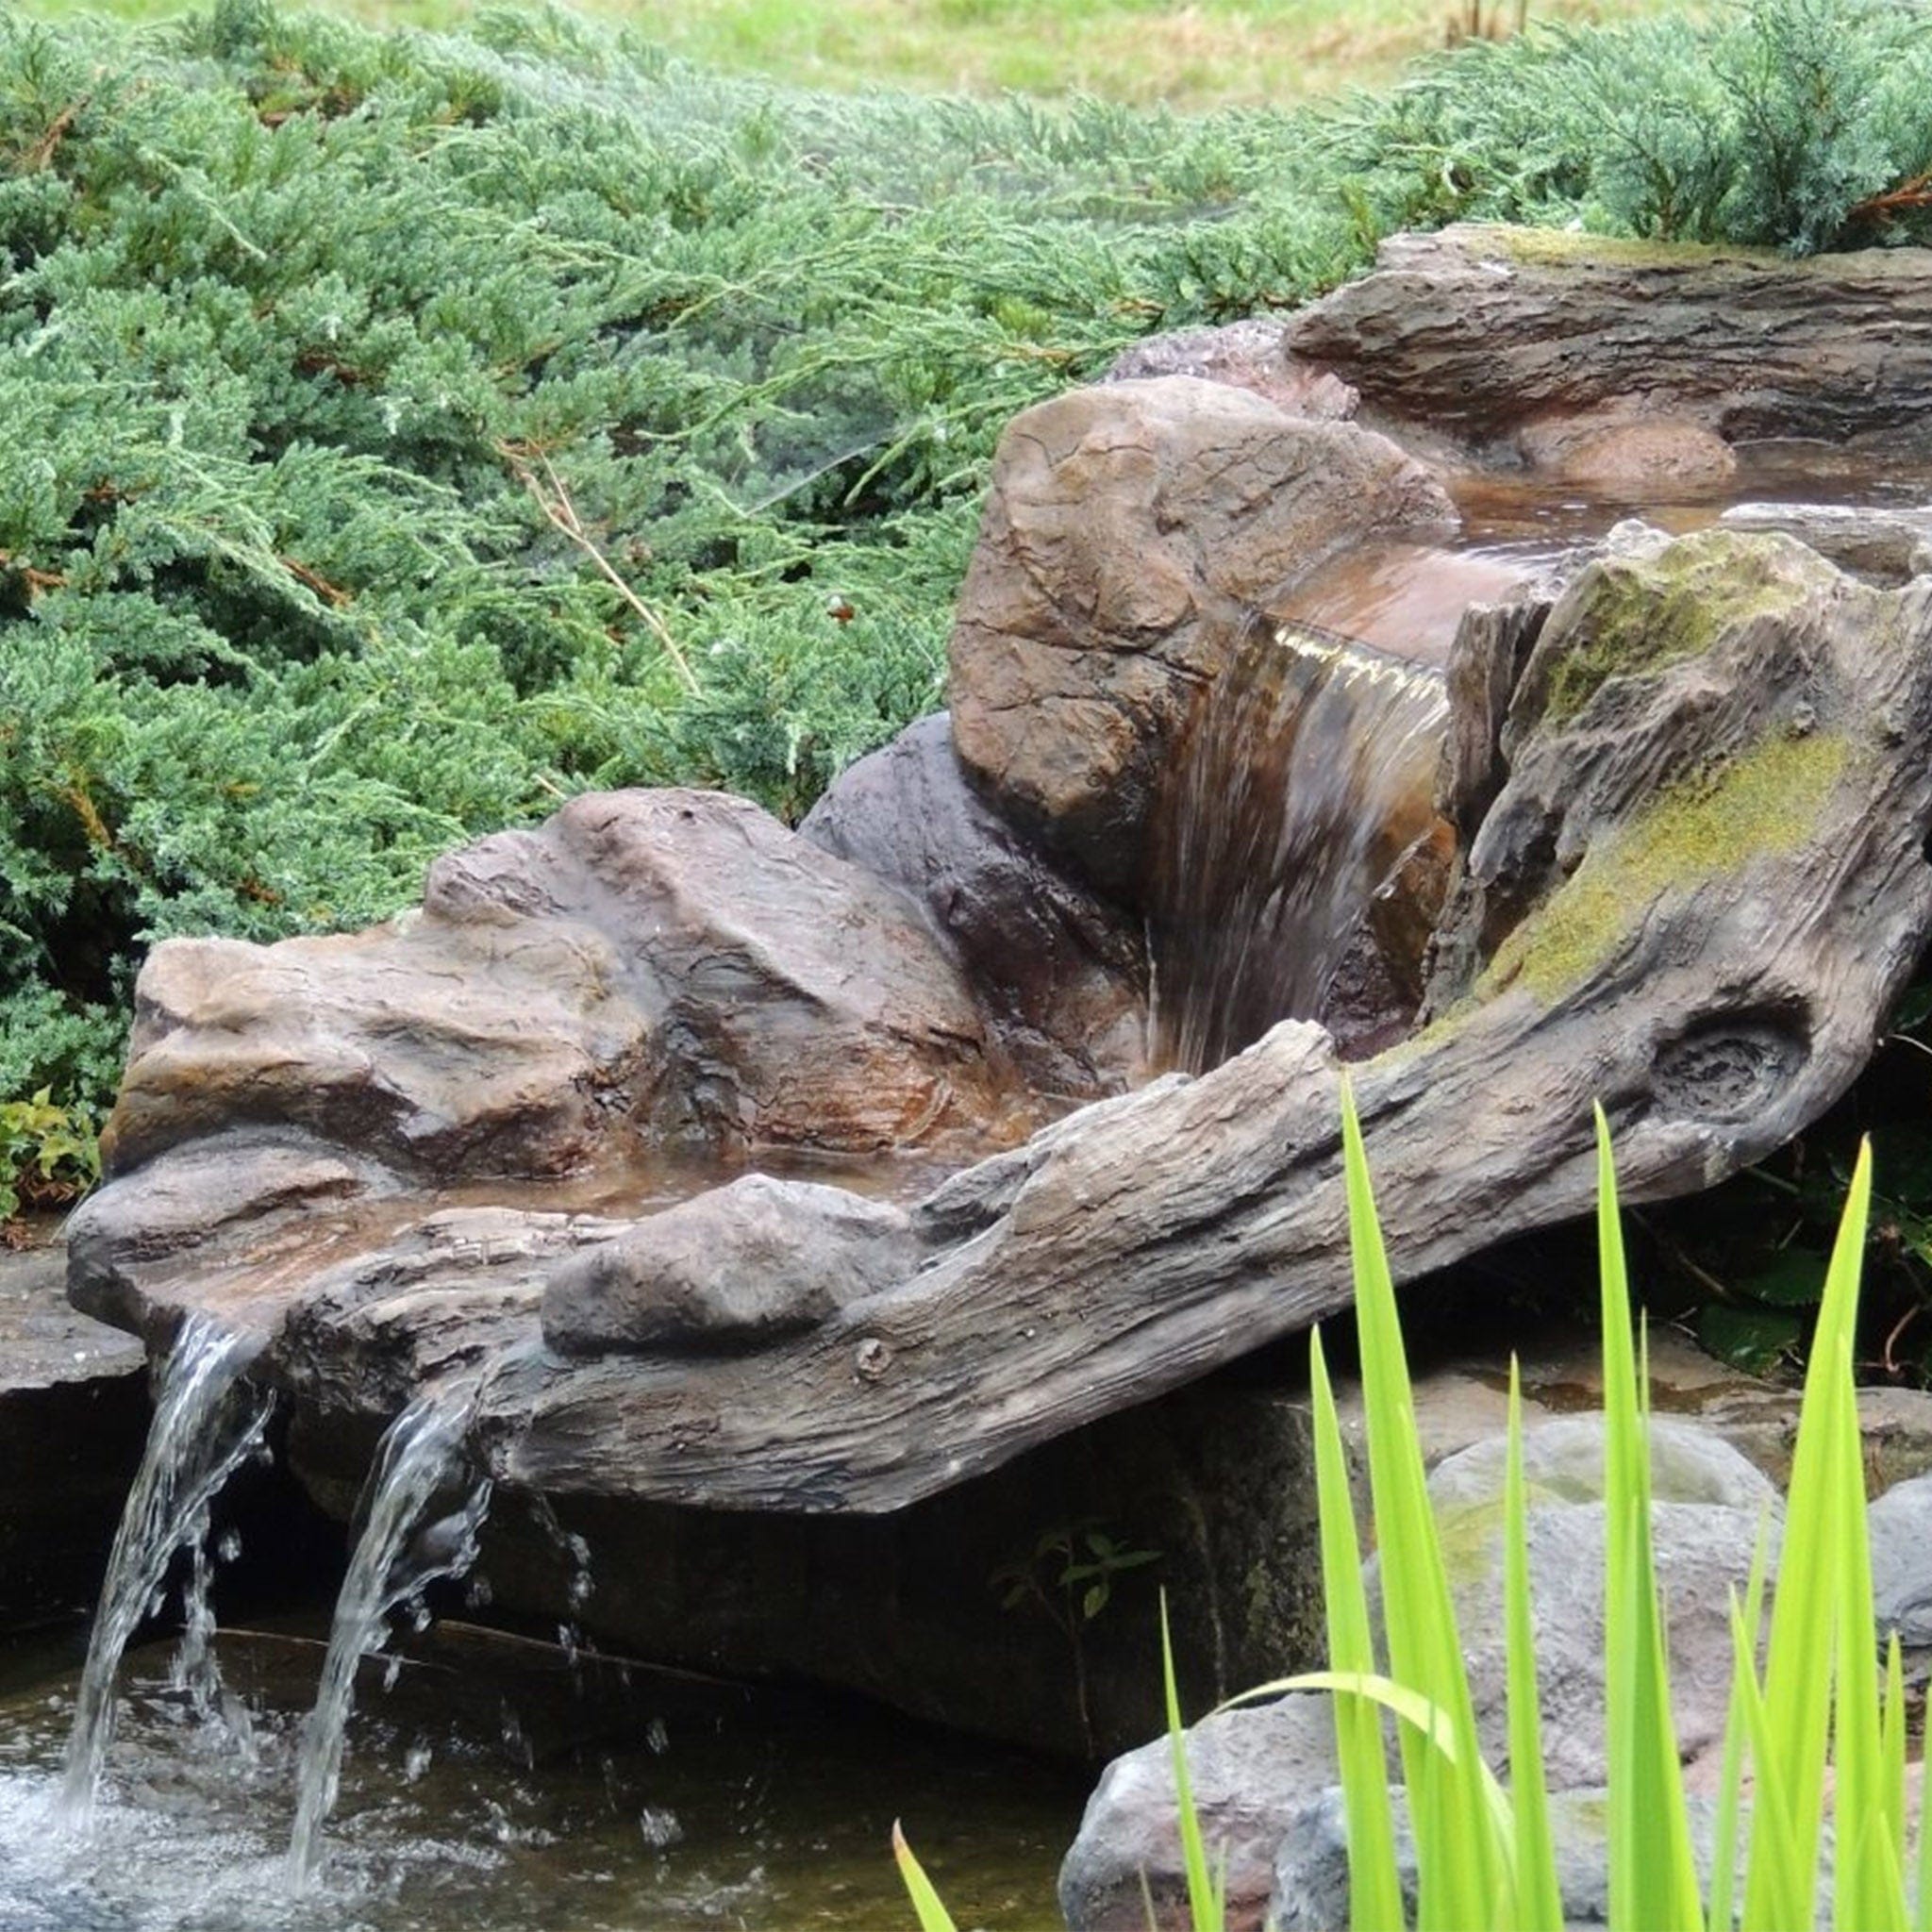 Bassin de jardin avec cascade : installation, prix et conseils